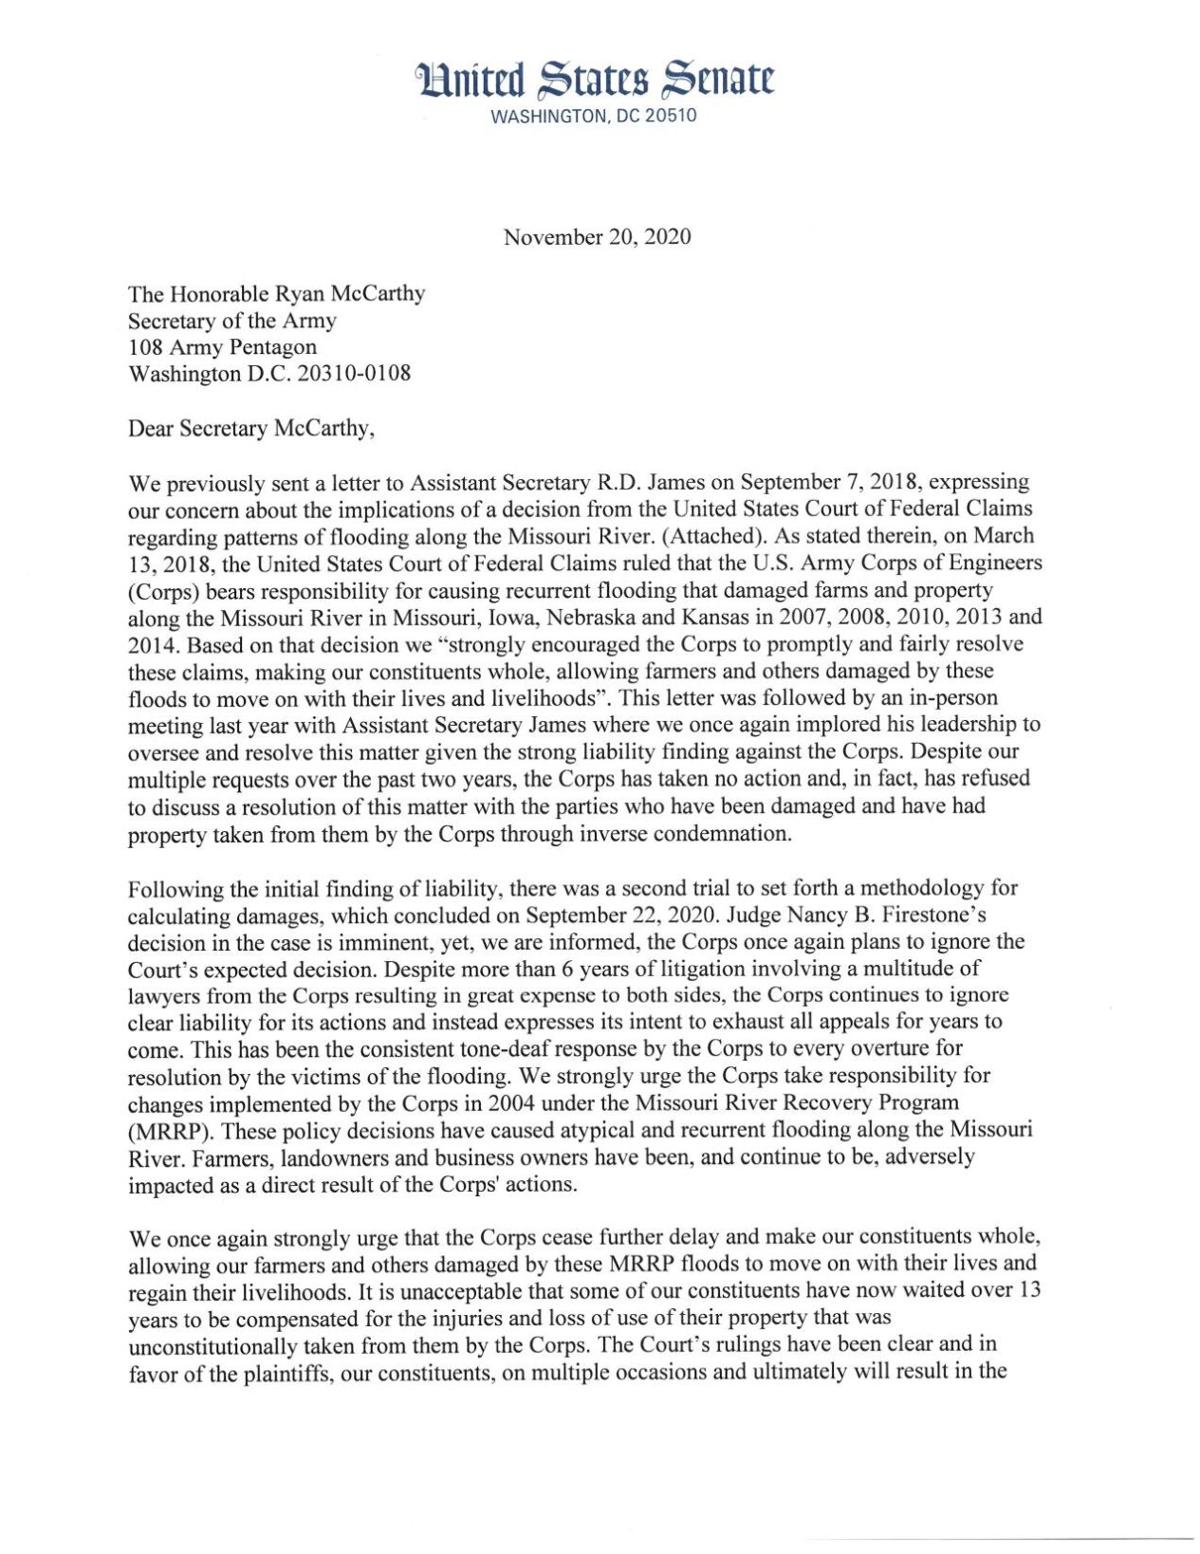 Letter from U.S. senators